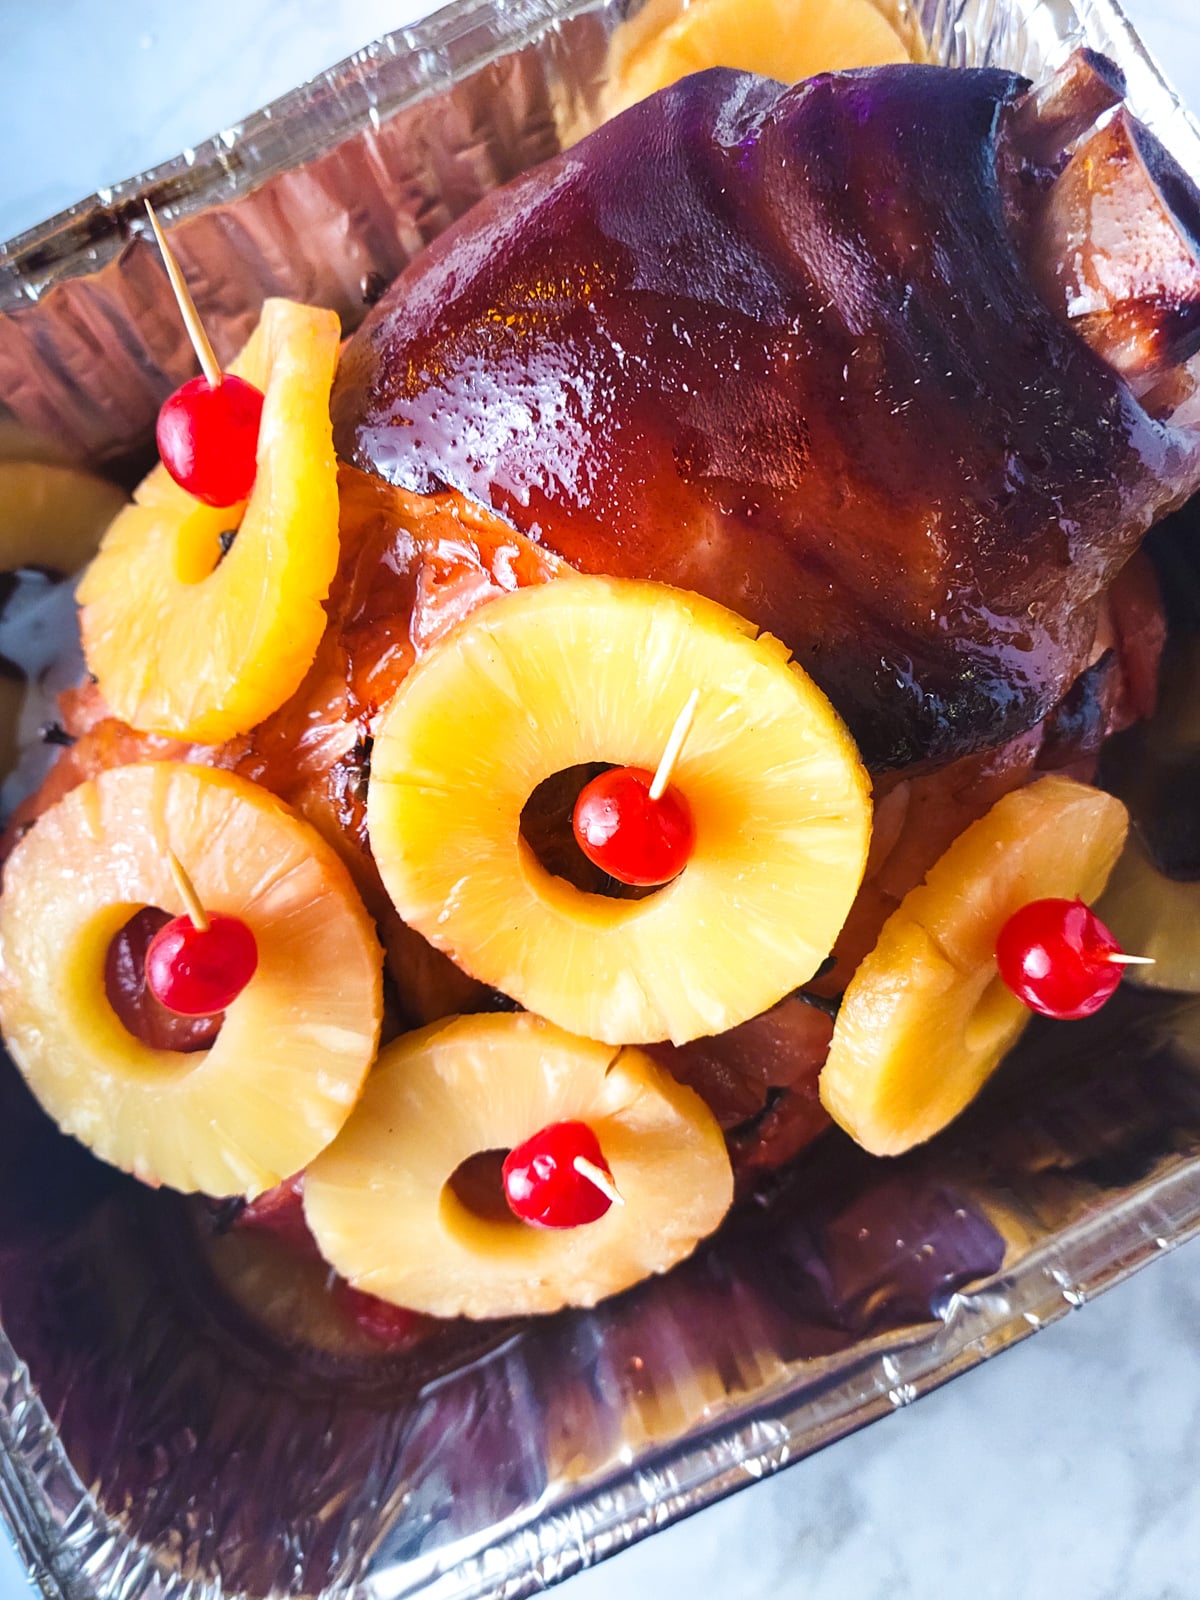 Pineapple slices and maraschino cherries topped on ham.